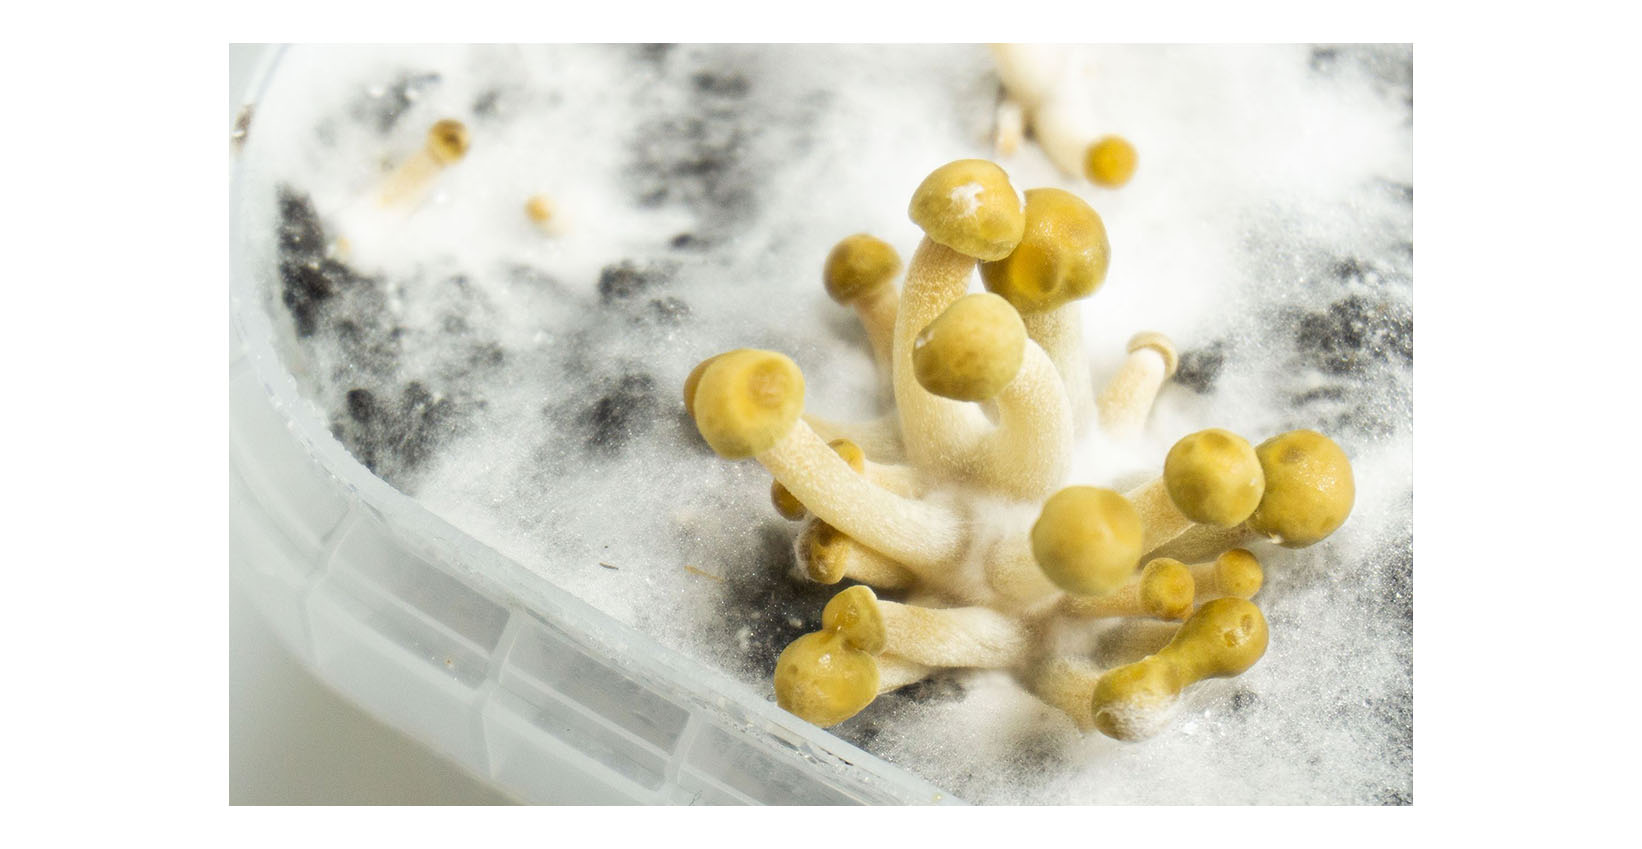 copelandia mushroom grow kit